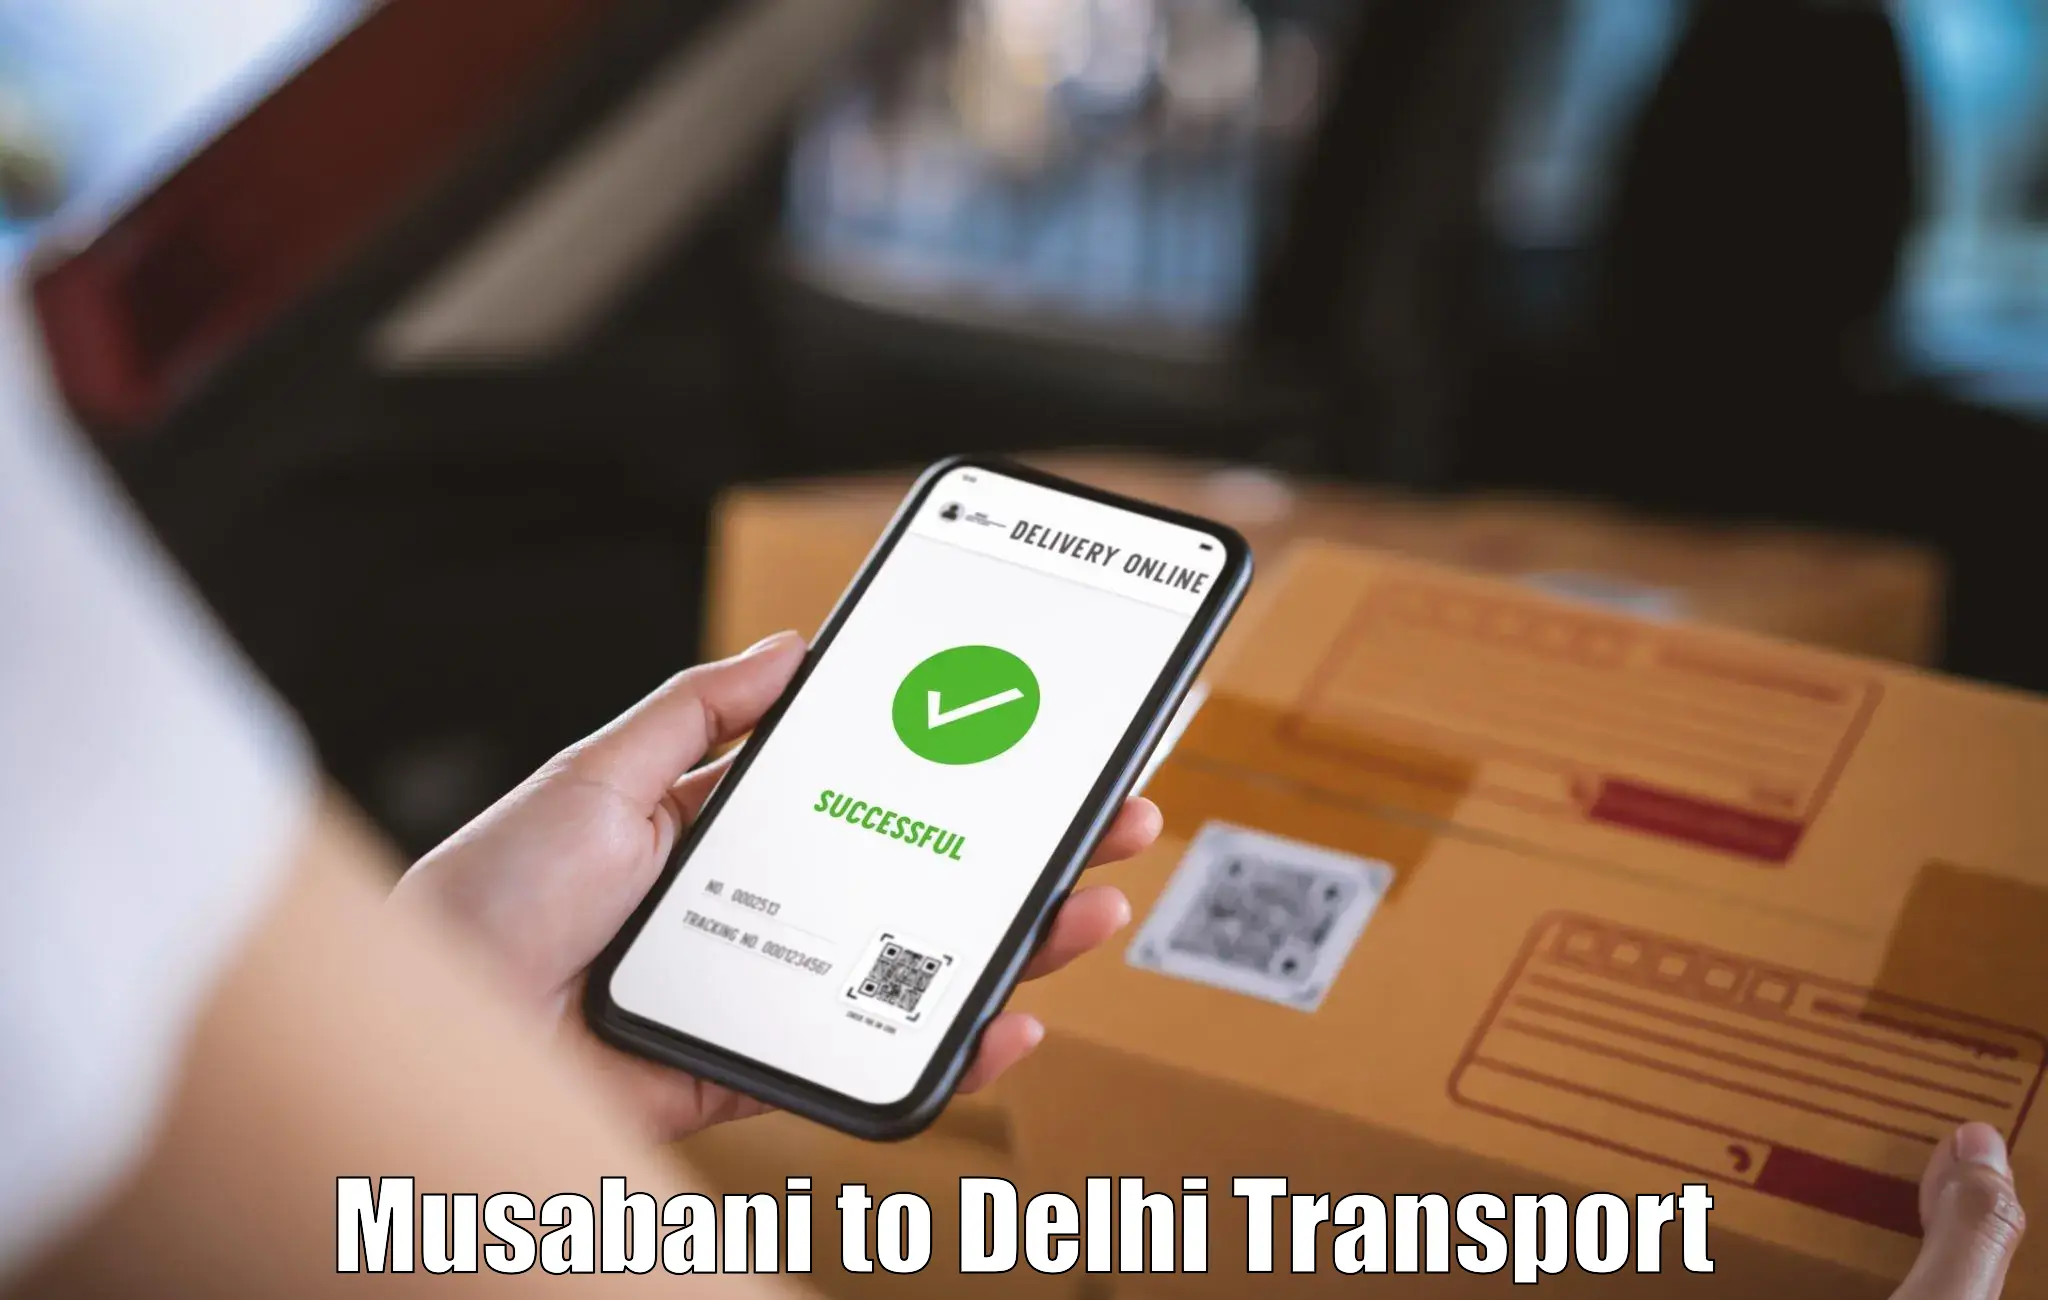 Transport in sharing Musabani to University of Delhi